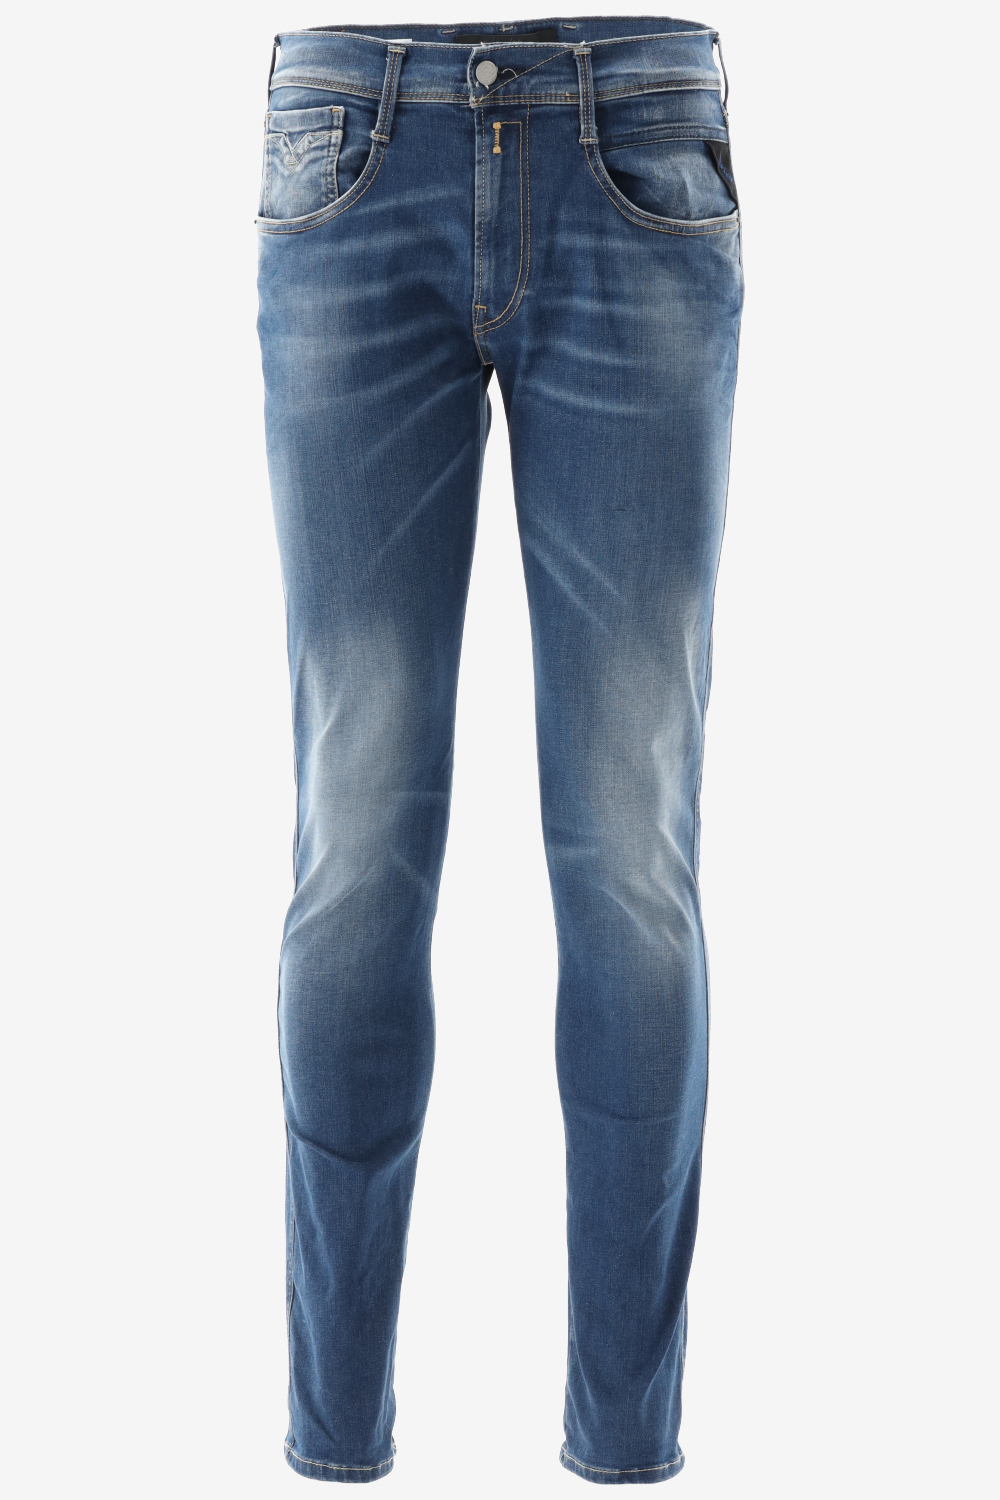 REPLAY M914Y.000.661XR03 Jeans - Heren - Medium Blue - W31 X L34